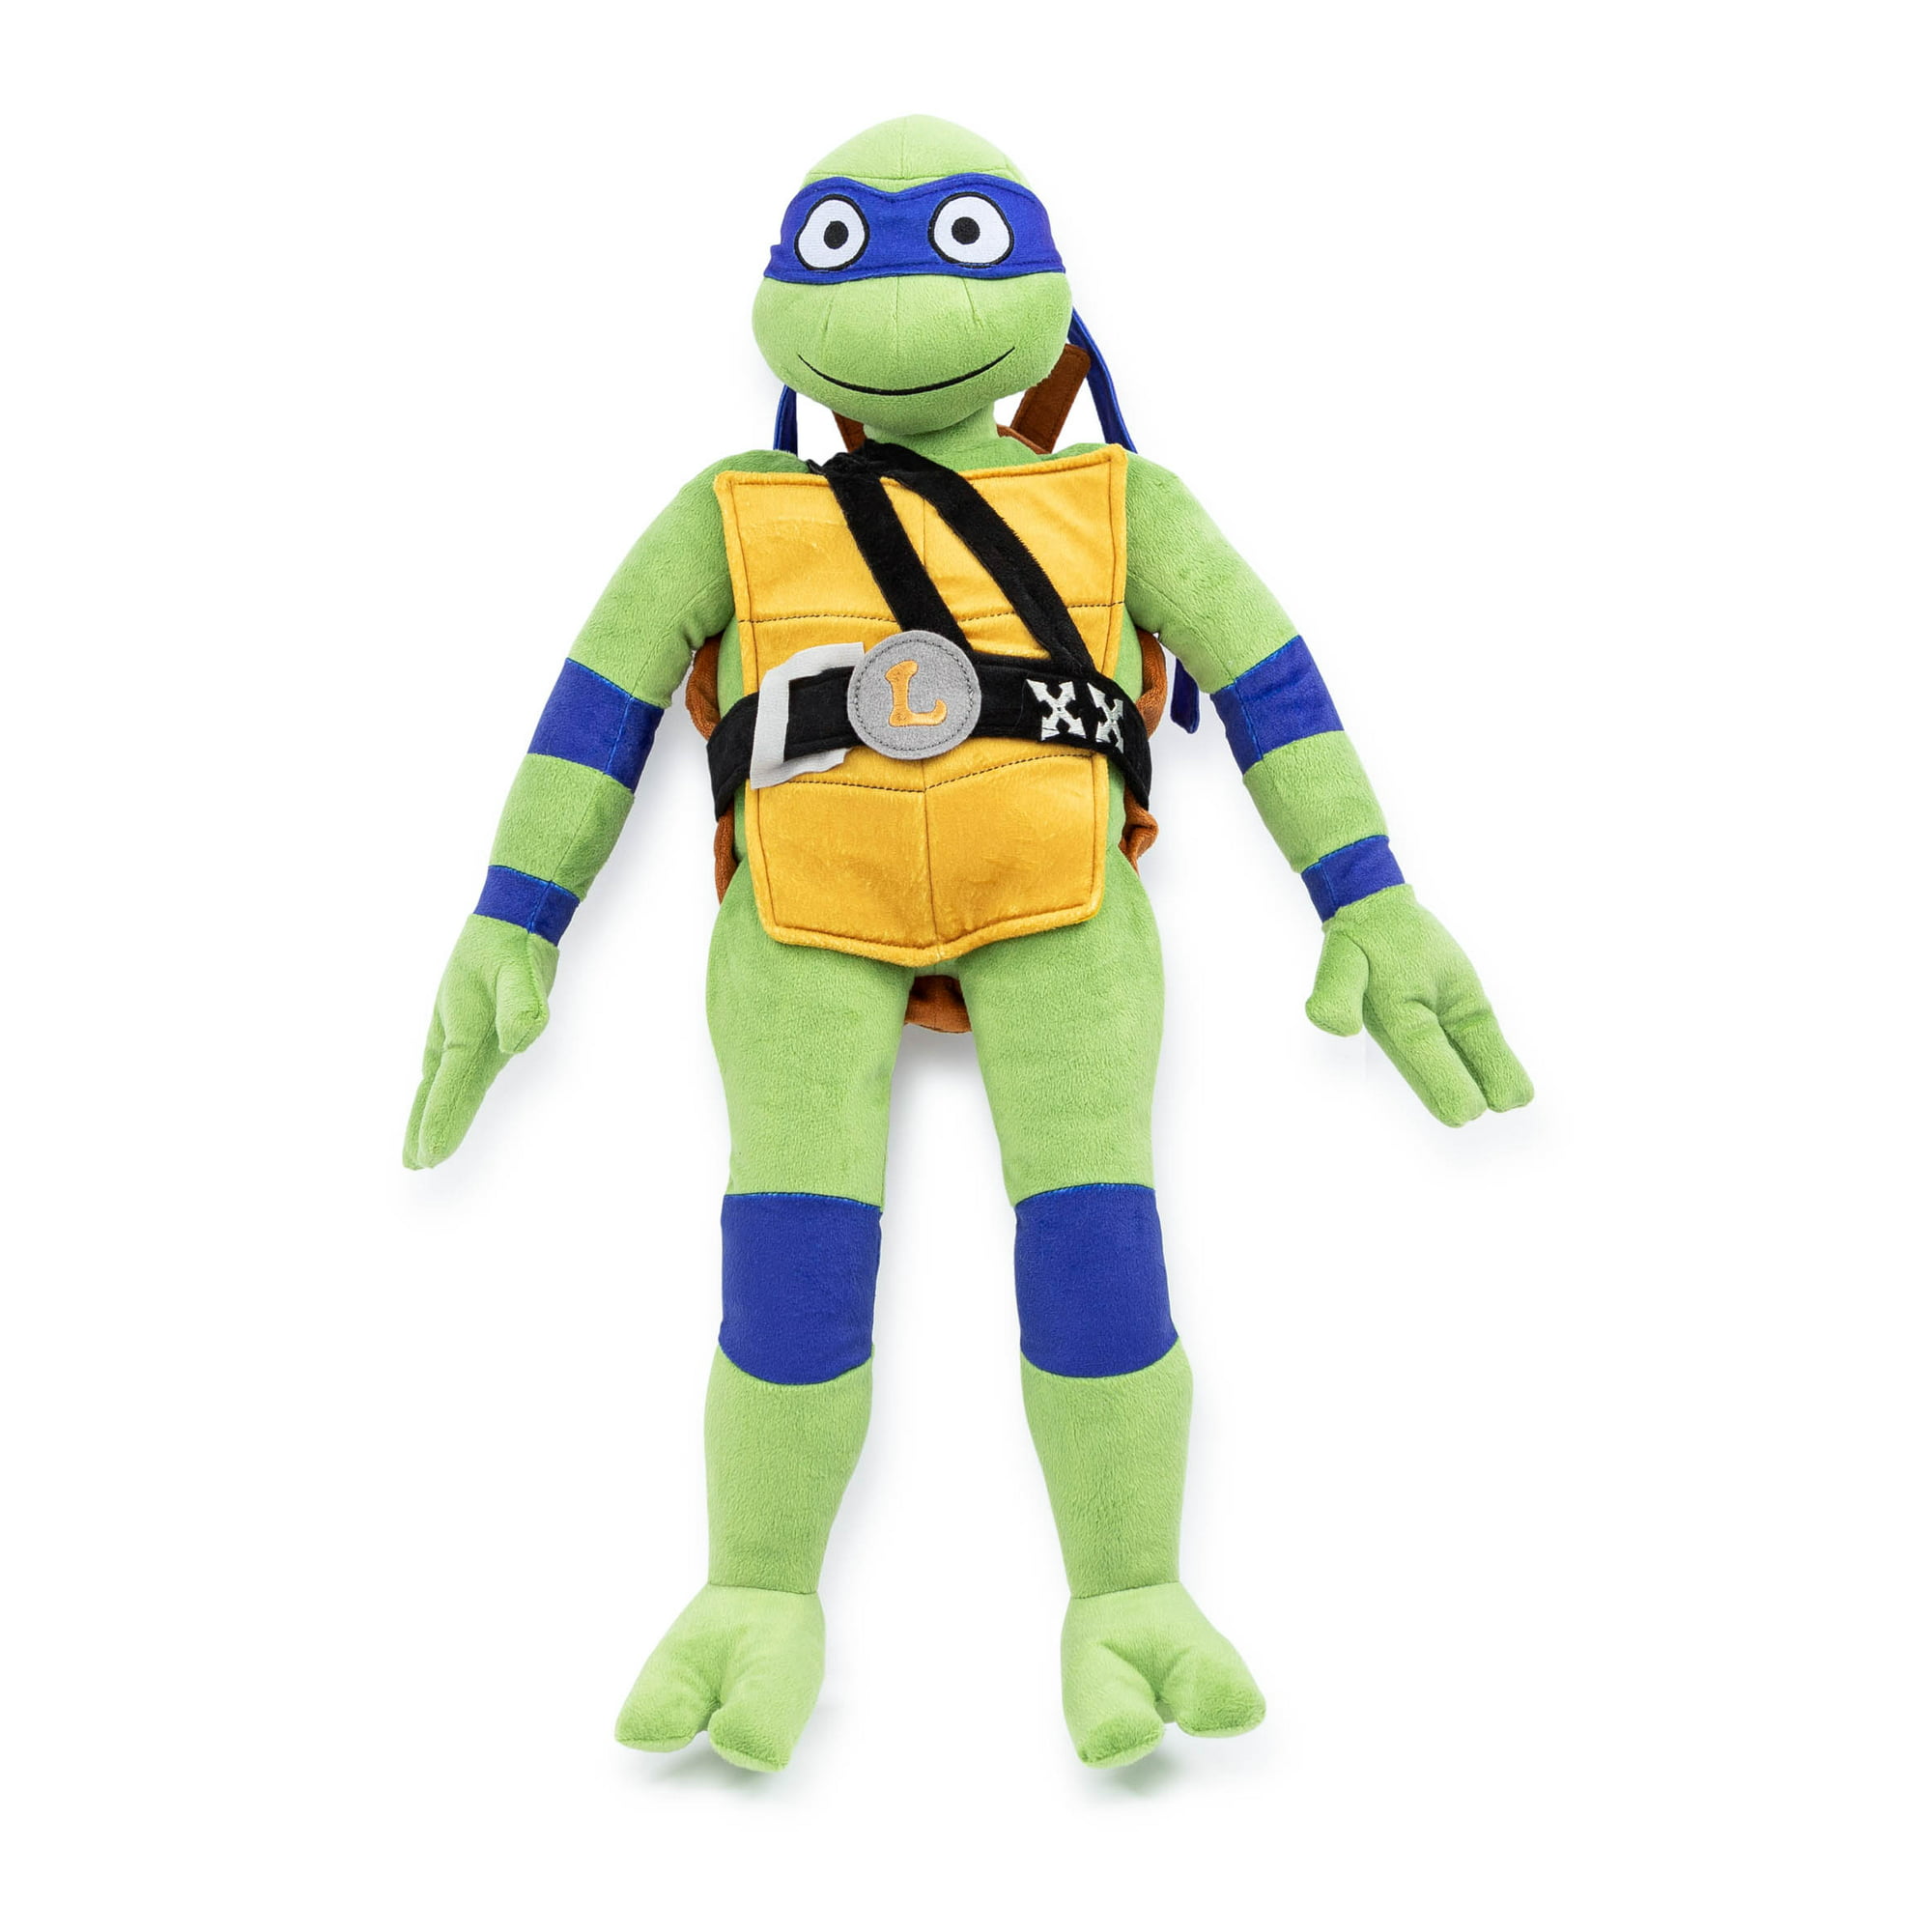 26" Teenage Mutant Ninja Turtles Kids' Plush Pillow Buddy (Leo) $13.50 + Free Shipping w/ Walmart+ or $35+